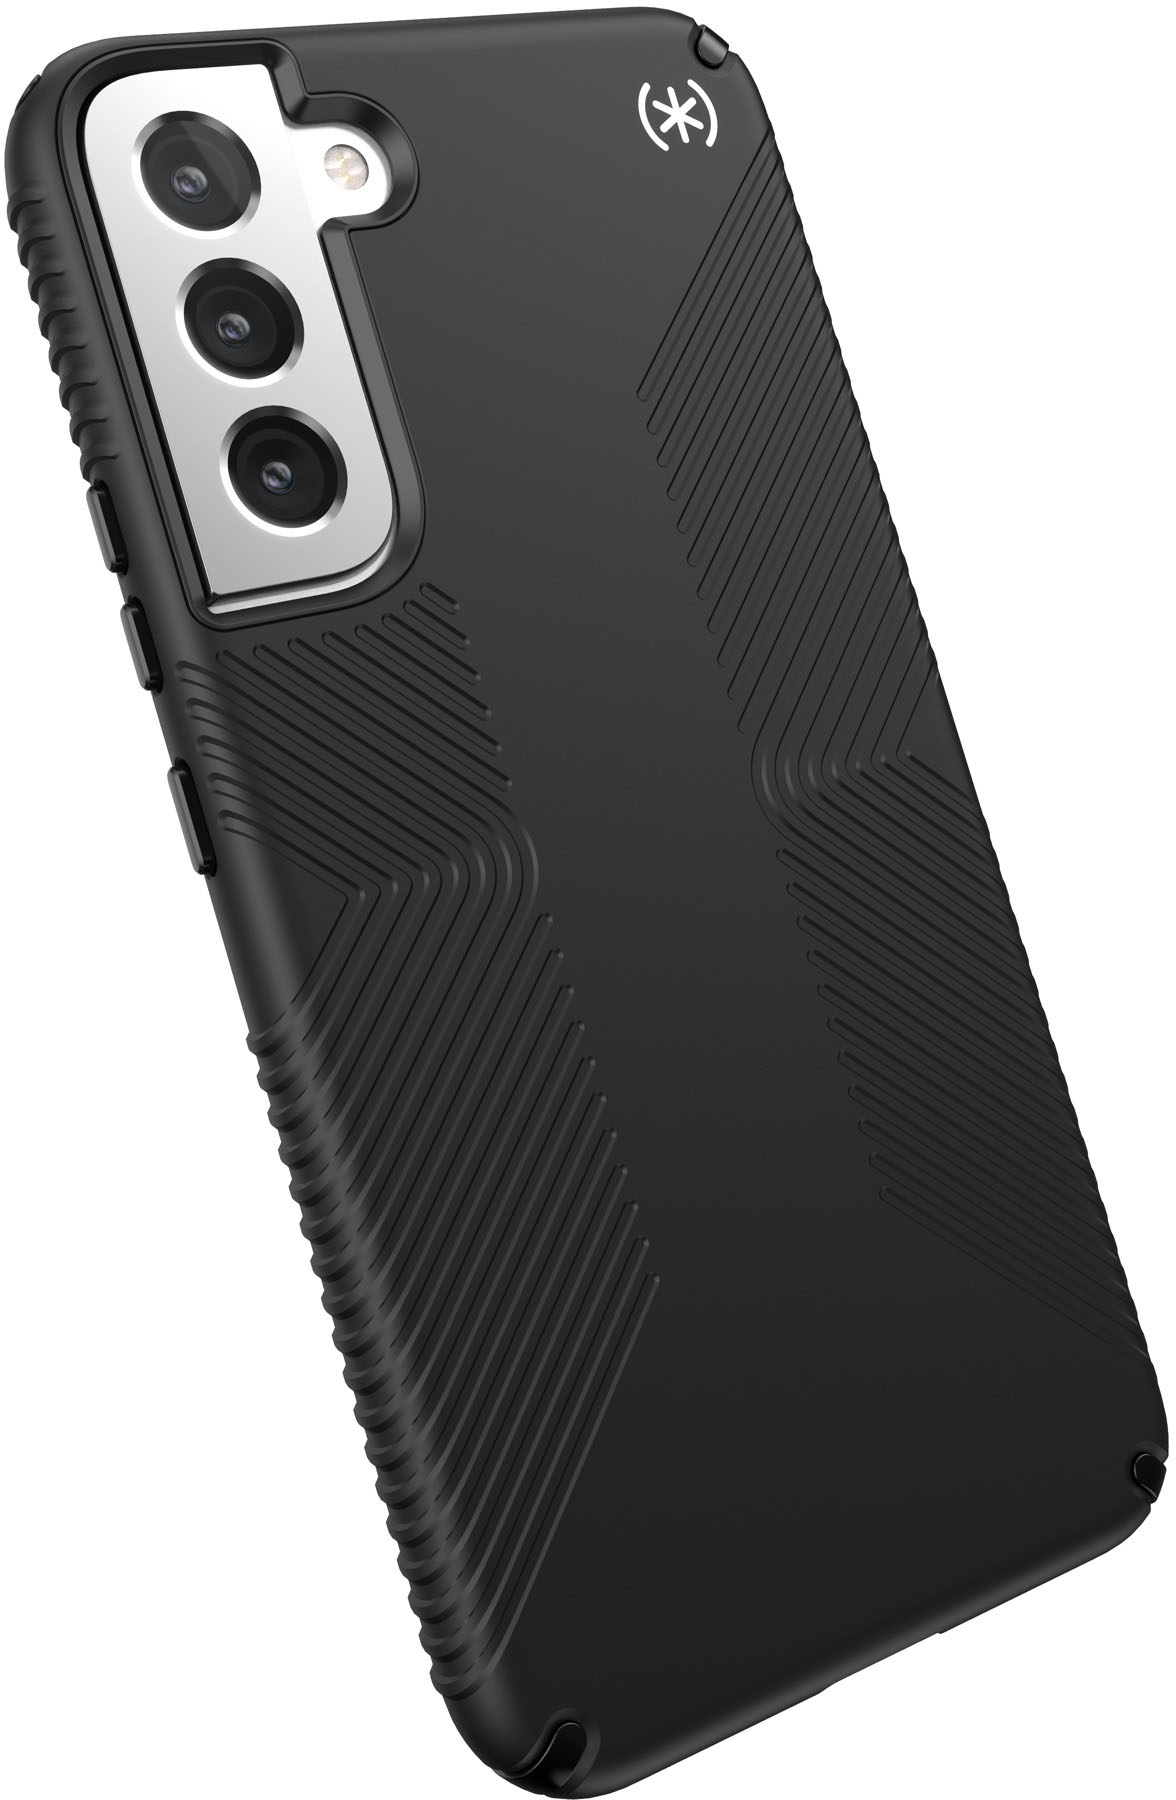 Left View: Speck - CandyShell Grip Case for LG G5 - Black/white